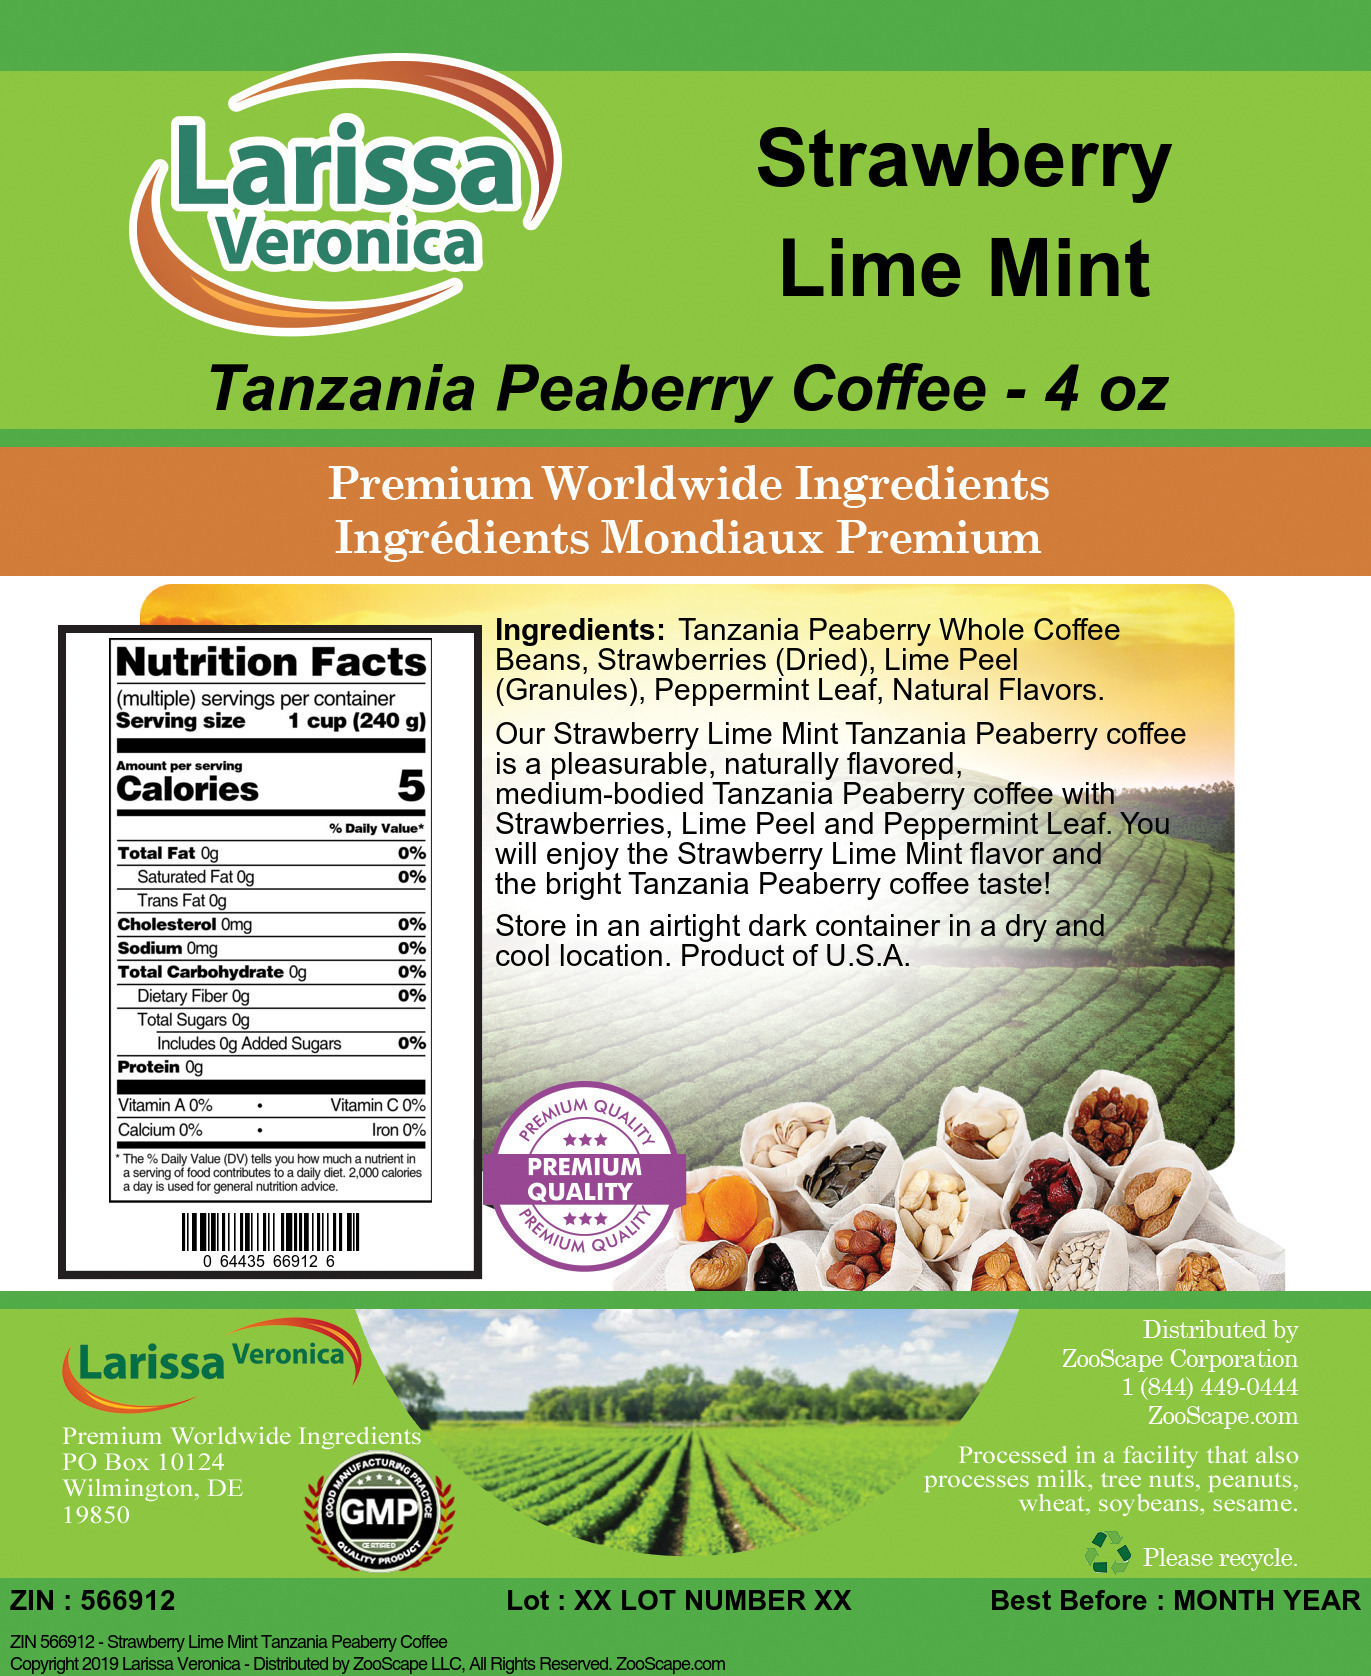 Strawberry Lime Mint Tanzania Peaberry Coffee - Label